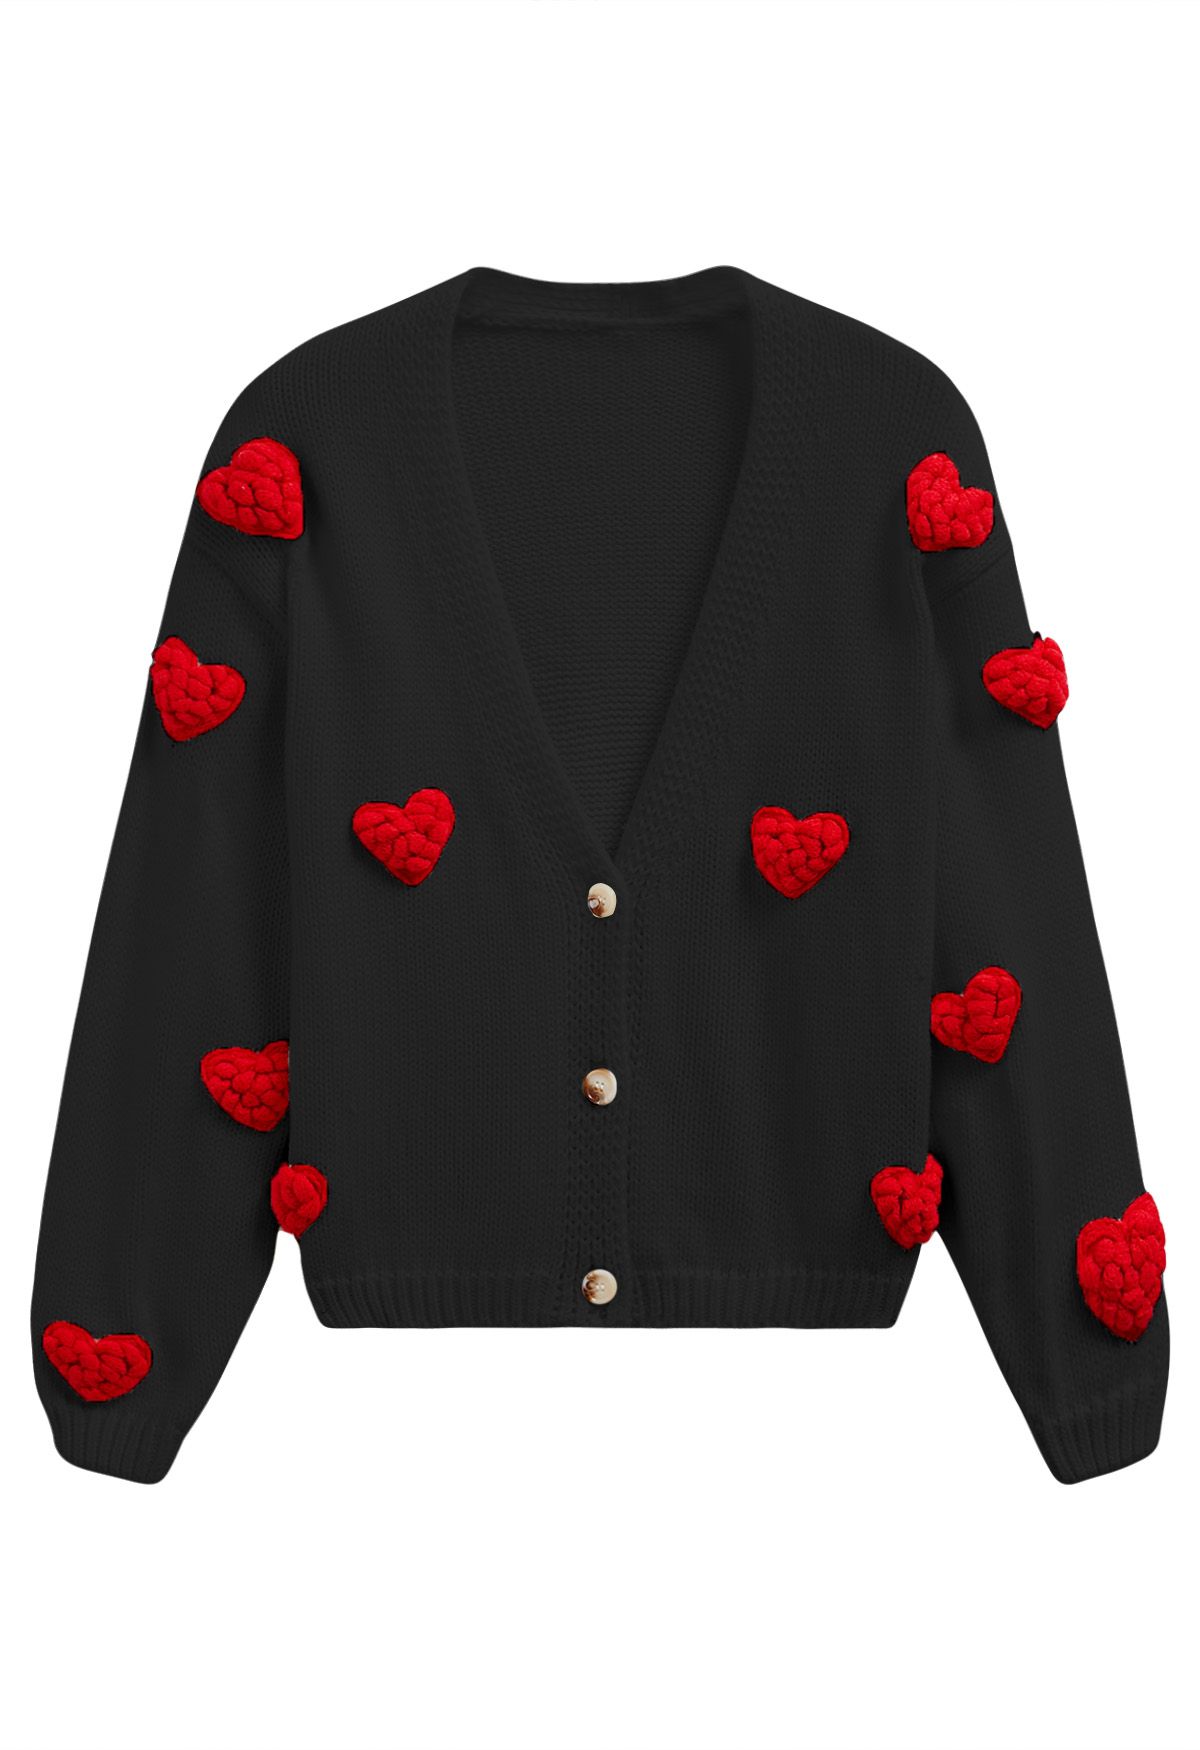 Romantic 3D Heart Knit Cardigan in Black - Retro, Indie and Unique